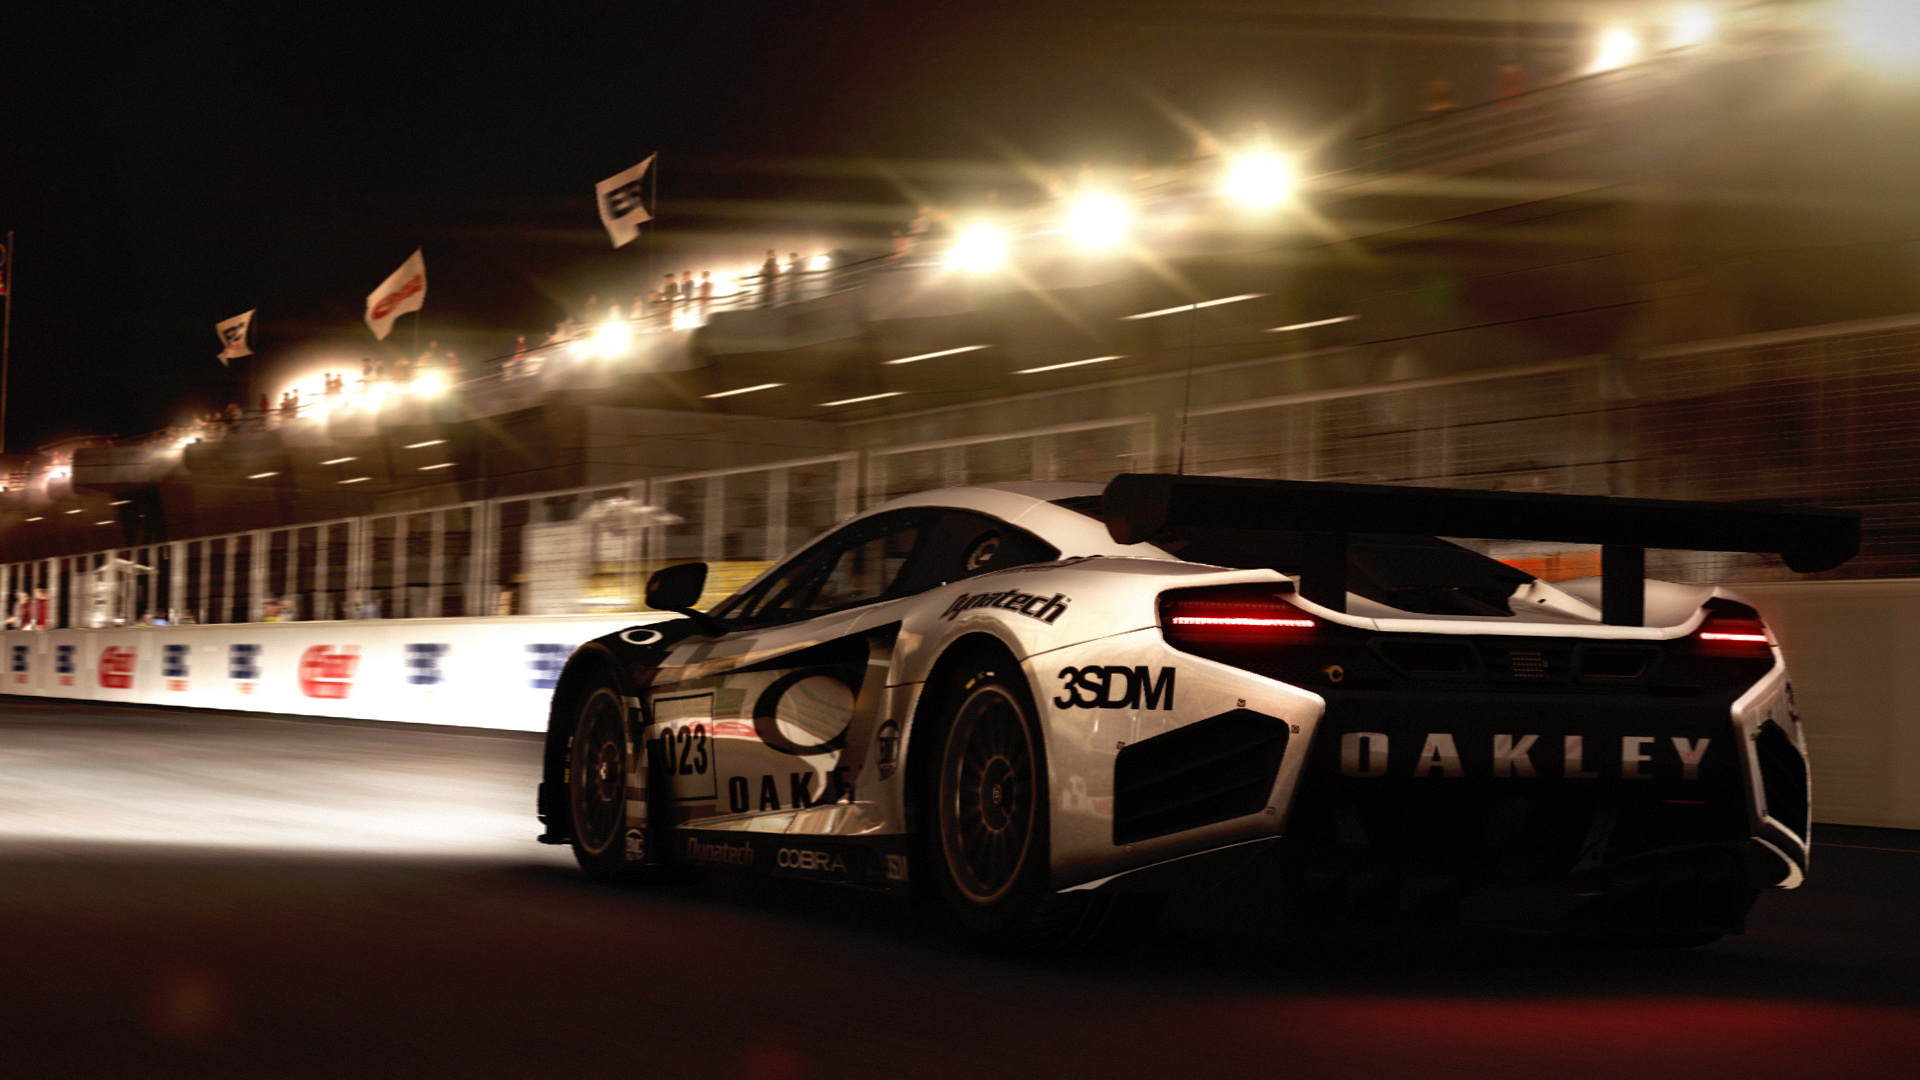 720p grid autosport background